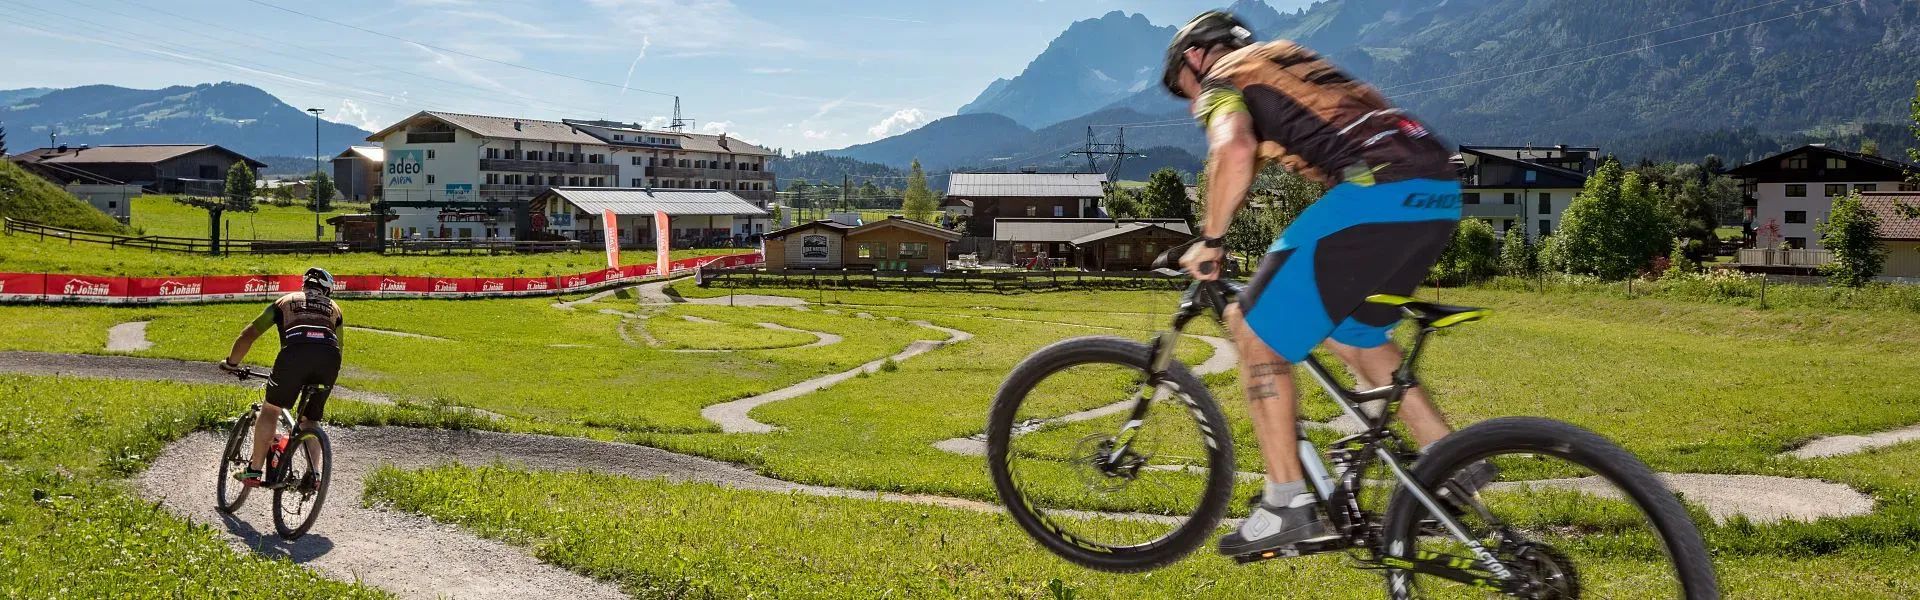 Mountainbike Skill Park - Region St. Johann in Tirol